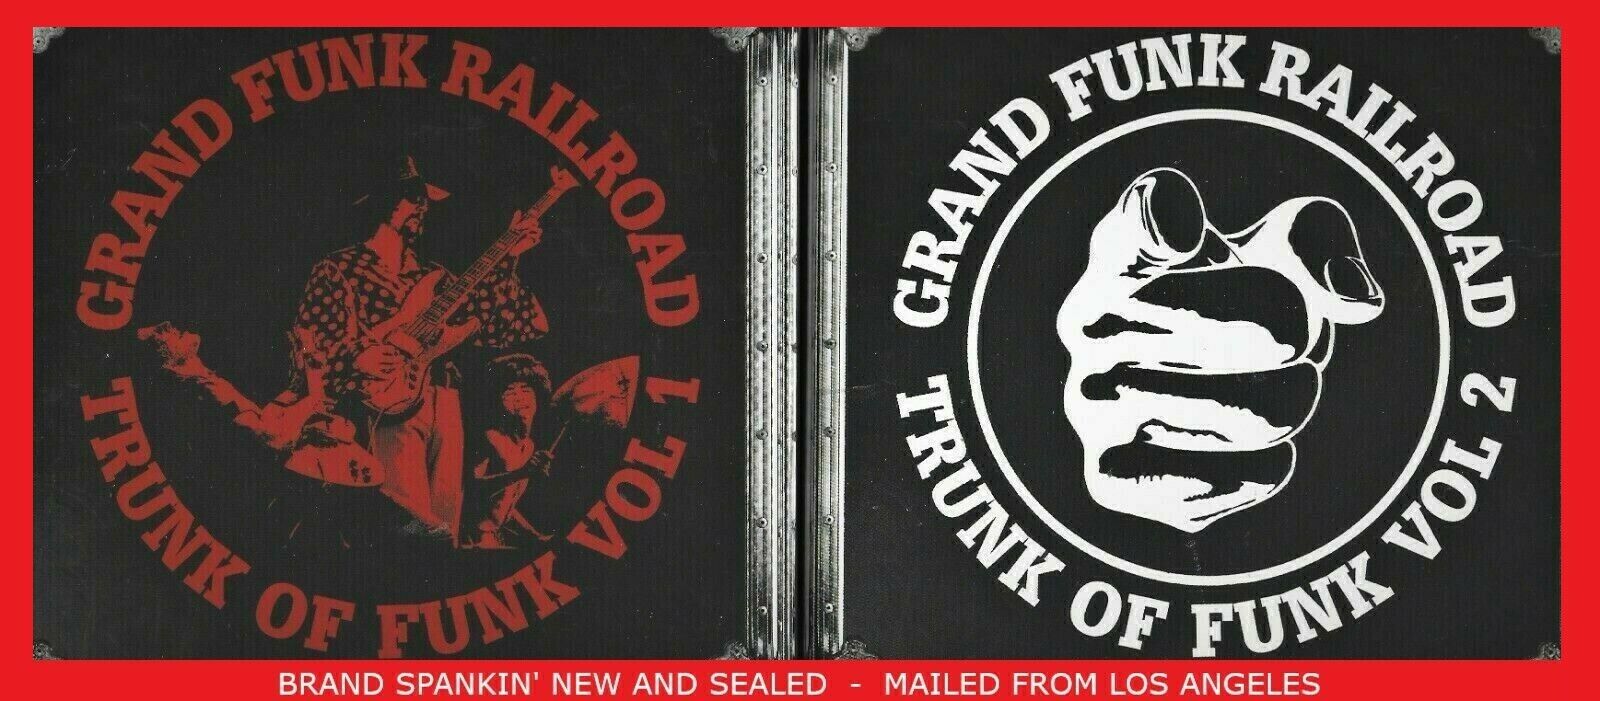 GRAND FUNK RAILROAD  TRUNK OF FUNK  VOL 1 & 2  = 12CD's MailedFrom Los Angeles Darmowa wysyłka, GORĄCE